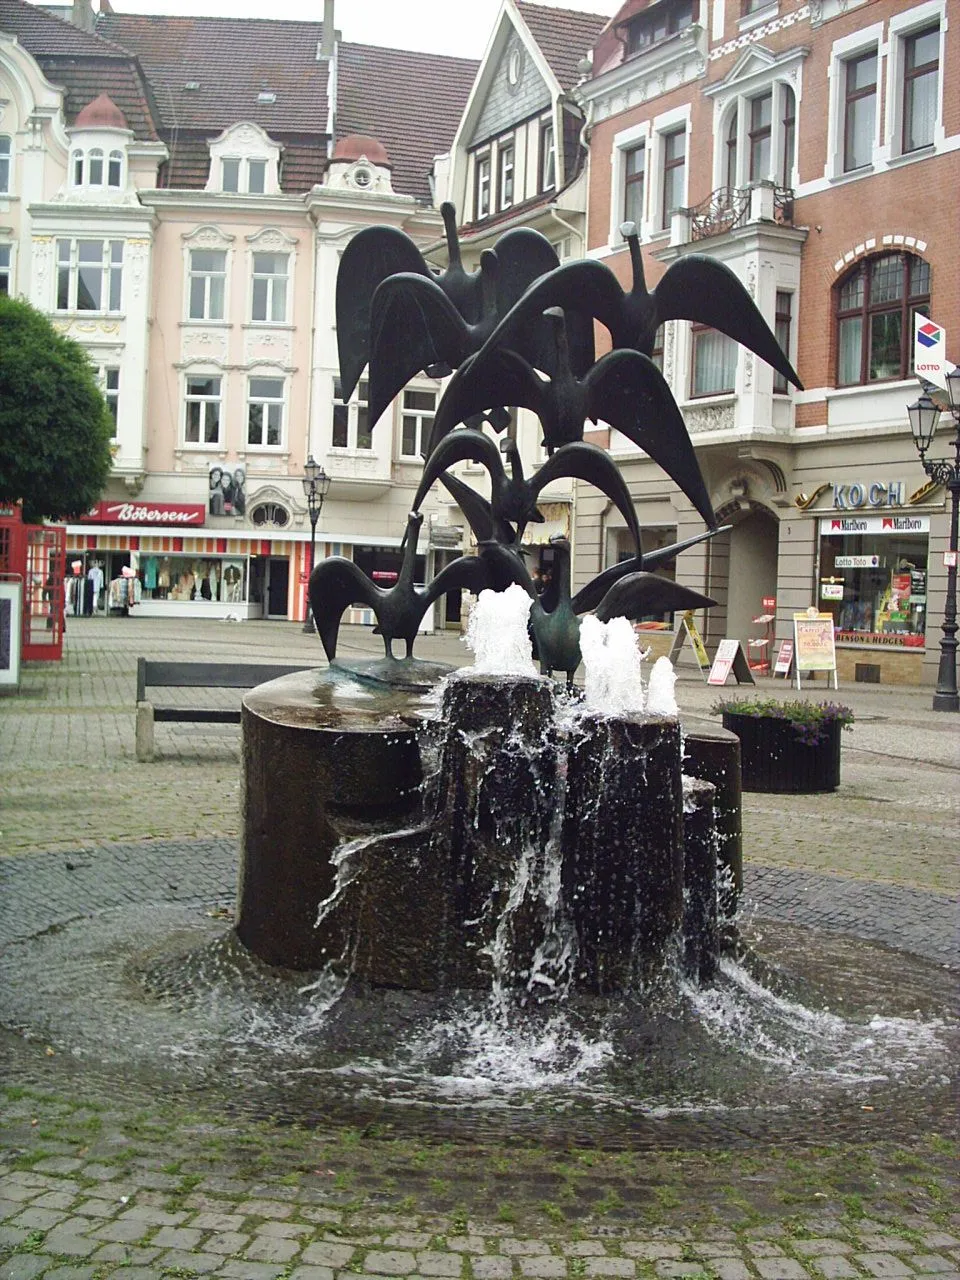 Photo showing: Gänsebrunnen in town of Herford, District of Herford, North Rhine-Westphalia, Germany.